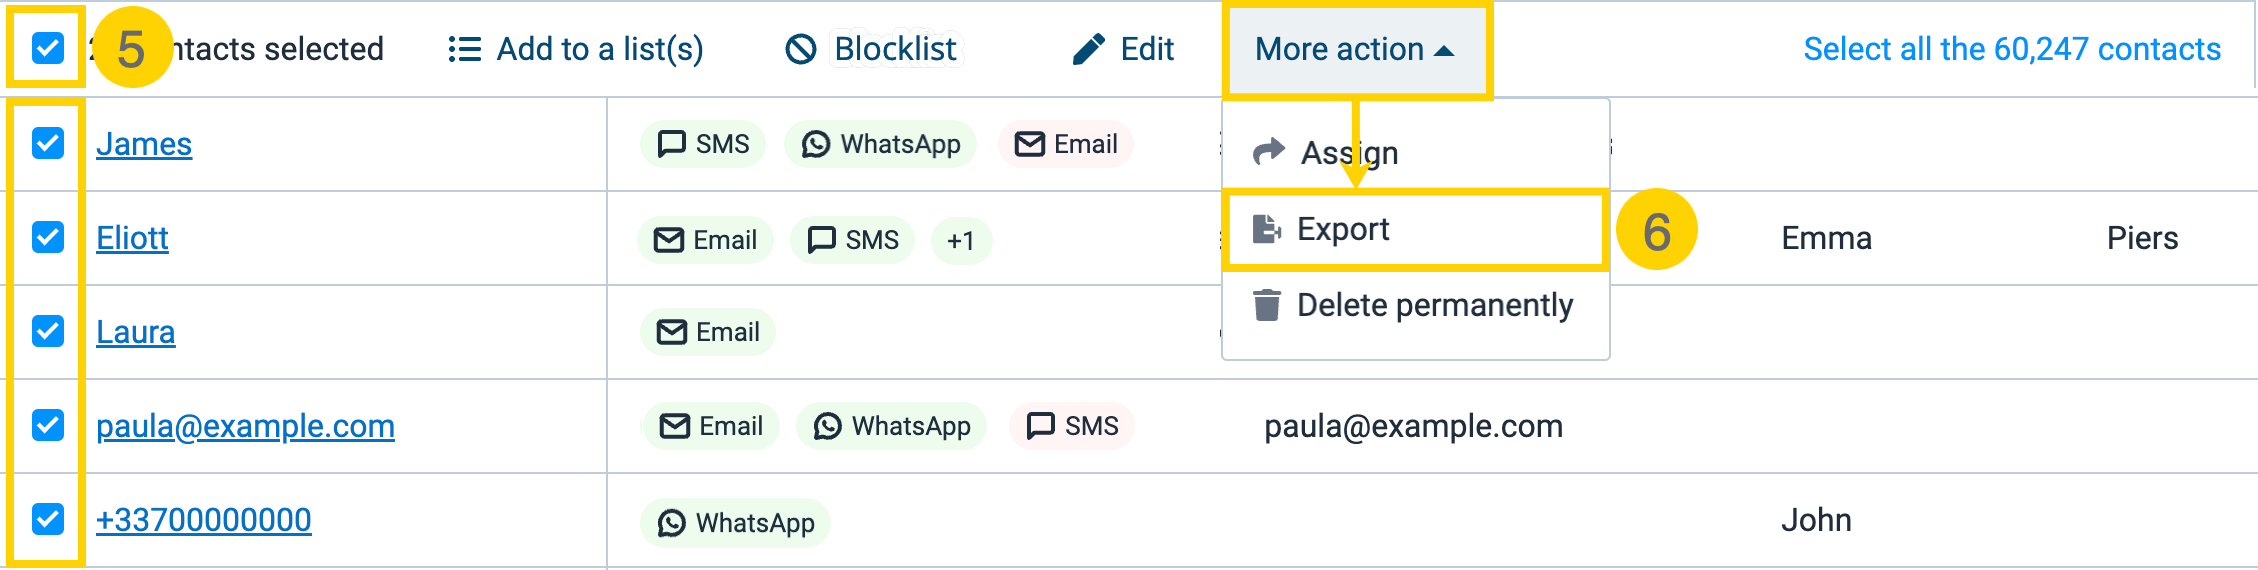 contact-listing_export-option_EN-US.png